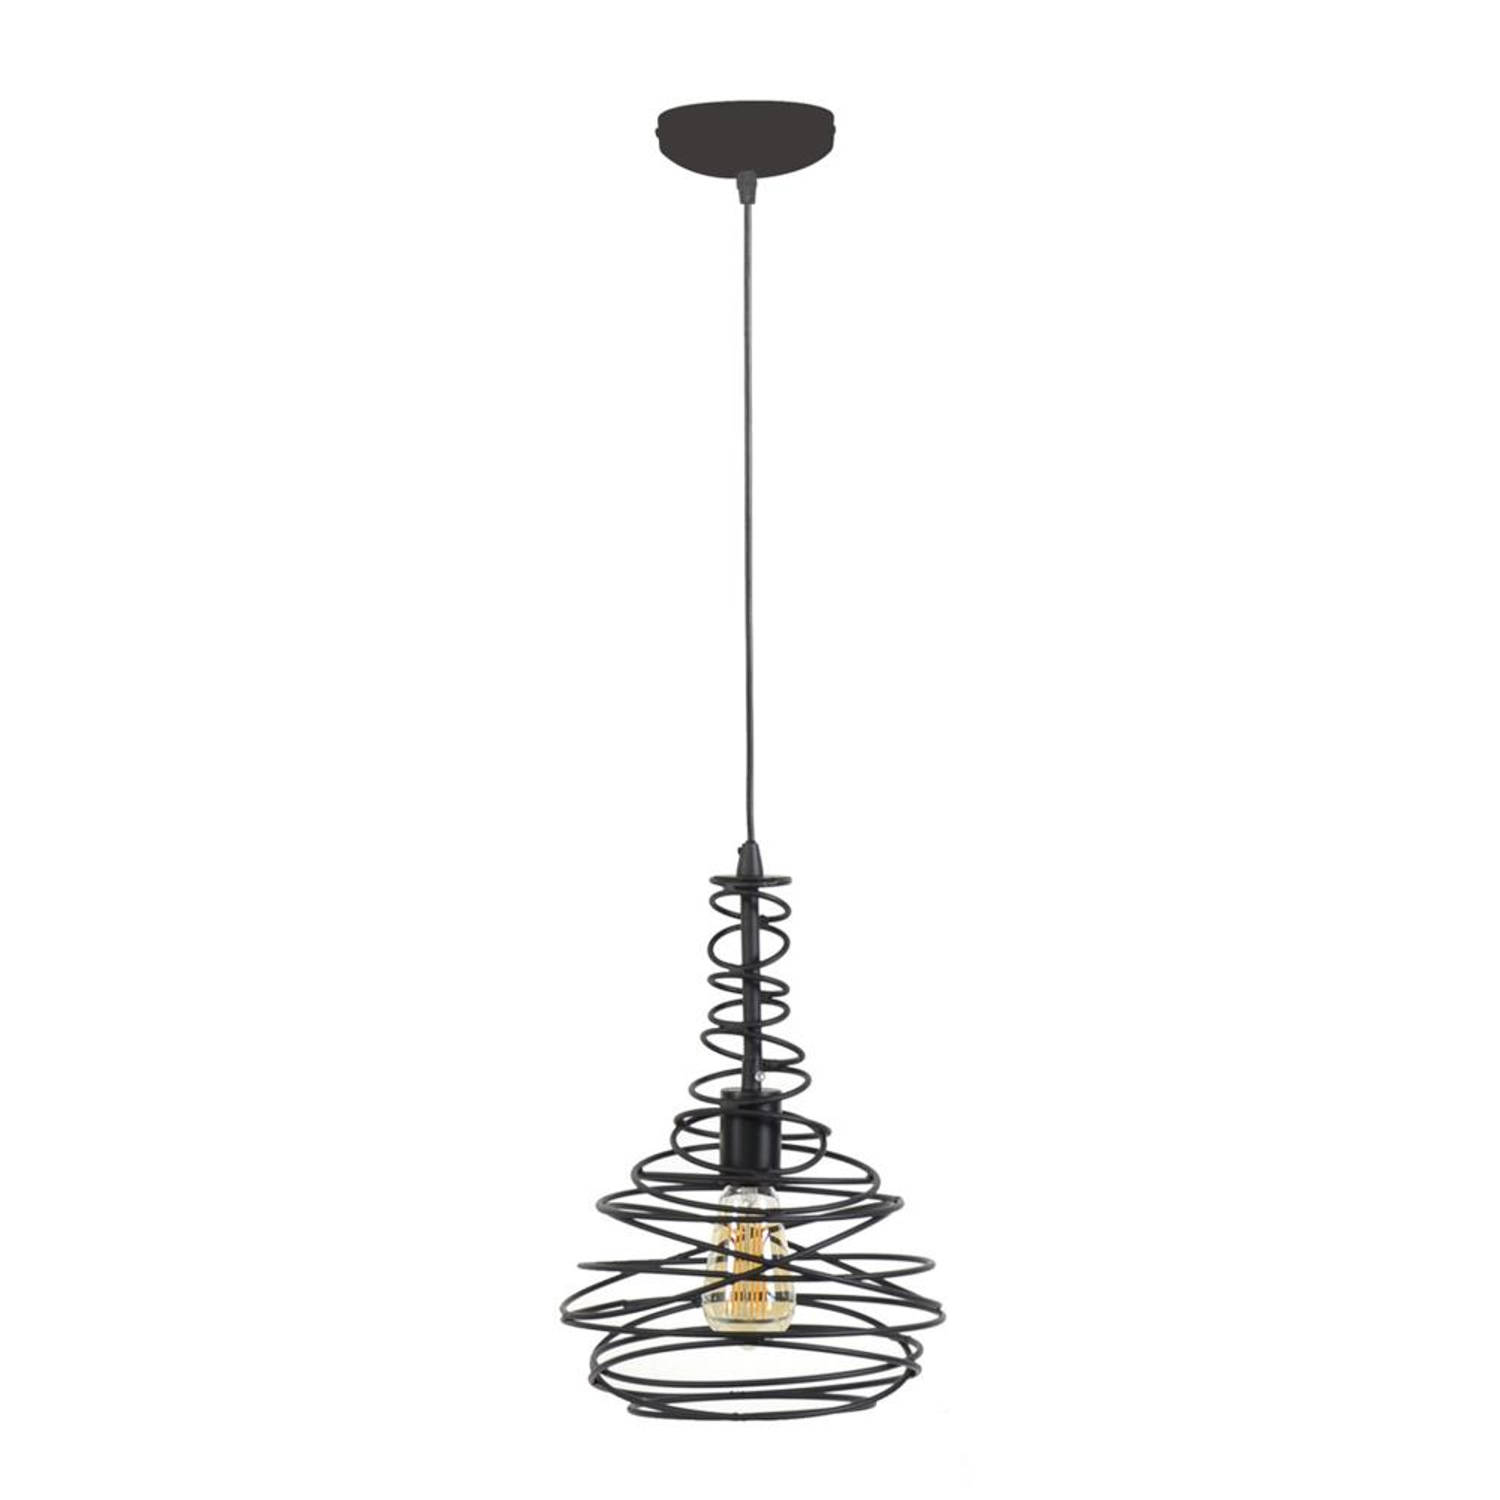 Giga Meubel Gm Hanglamp 1-lichts - Ø25cm - Metaal - Kegel - Lamp Spinn